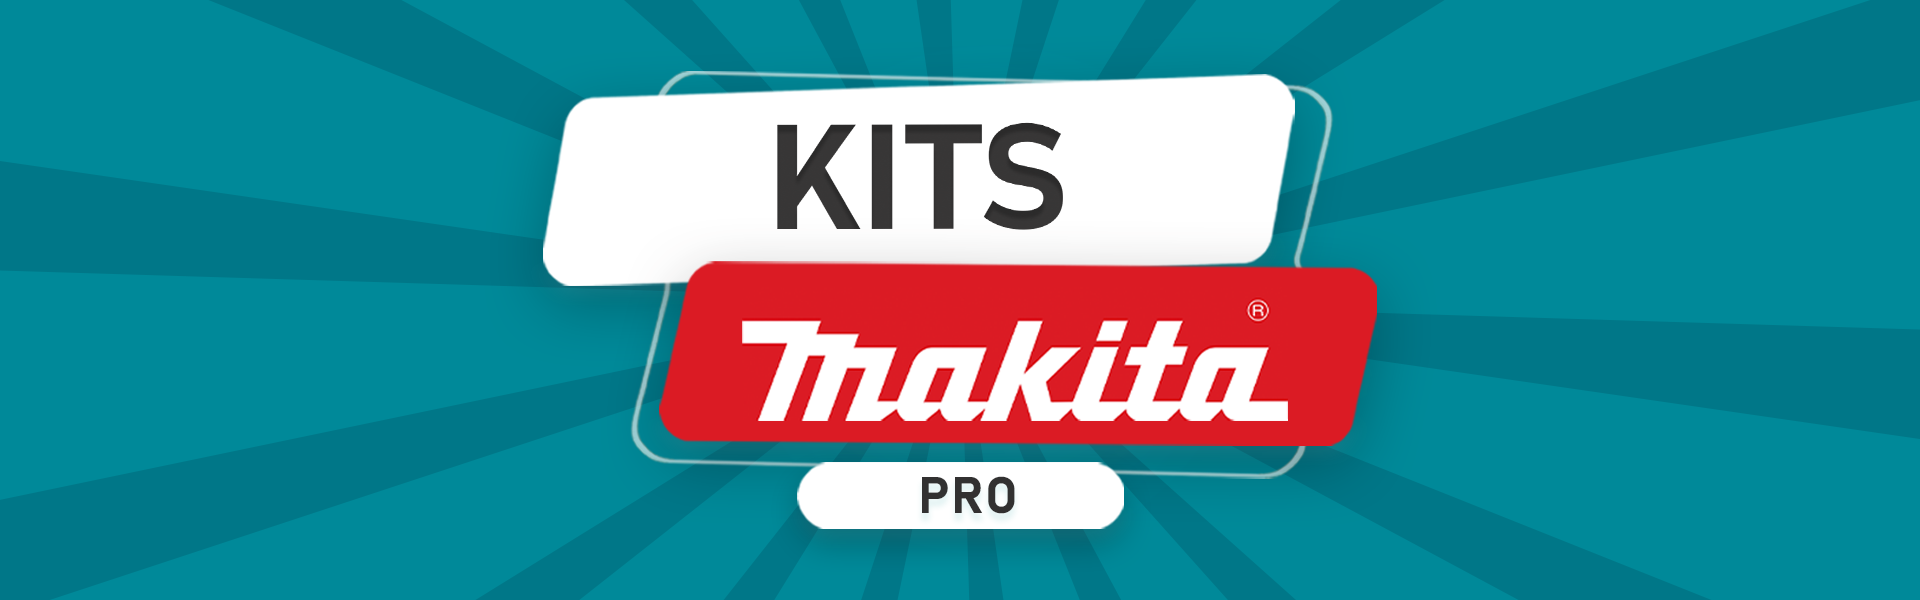 Kits Makita Pro